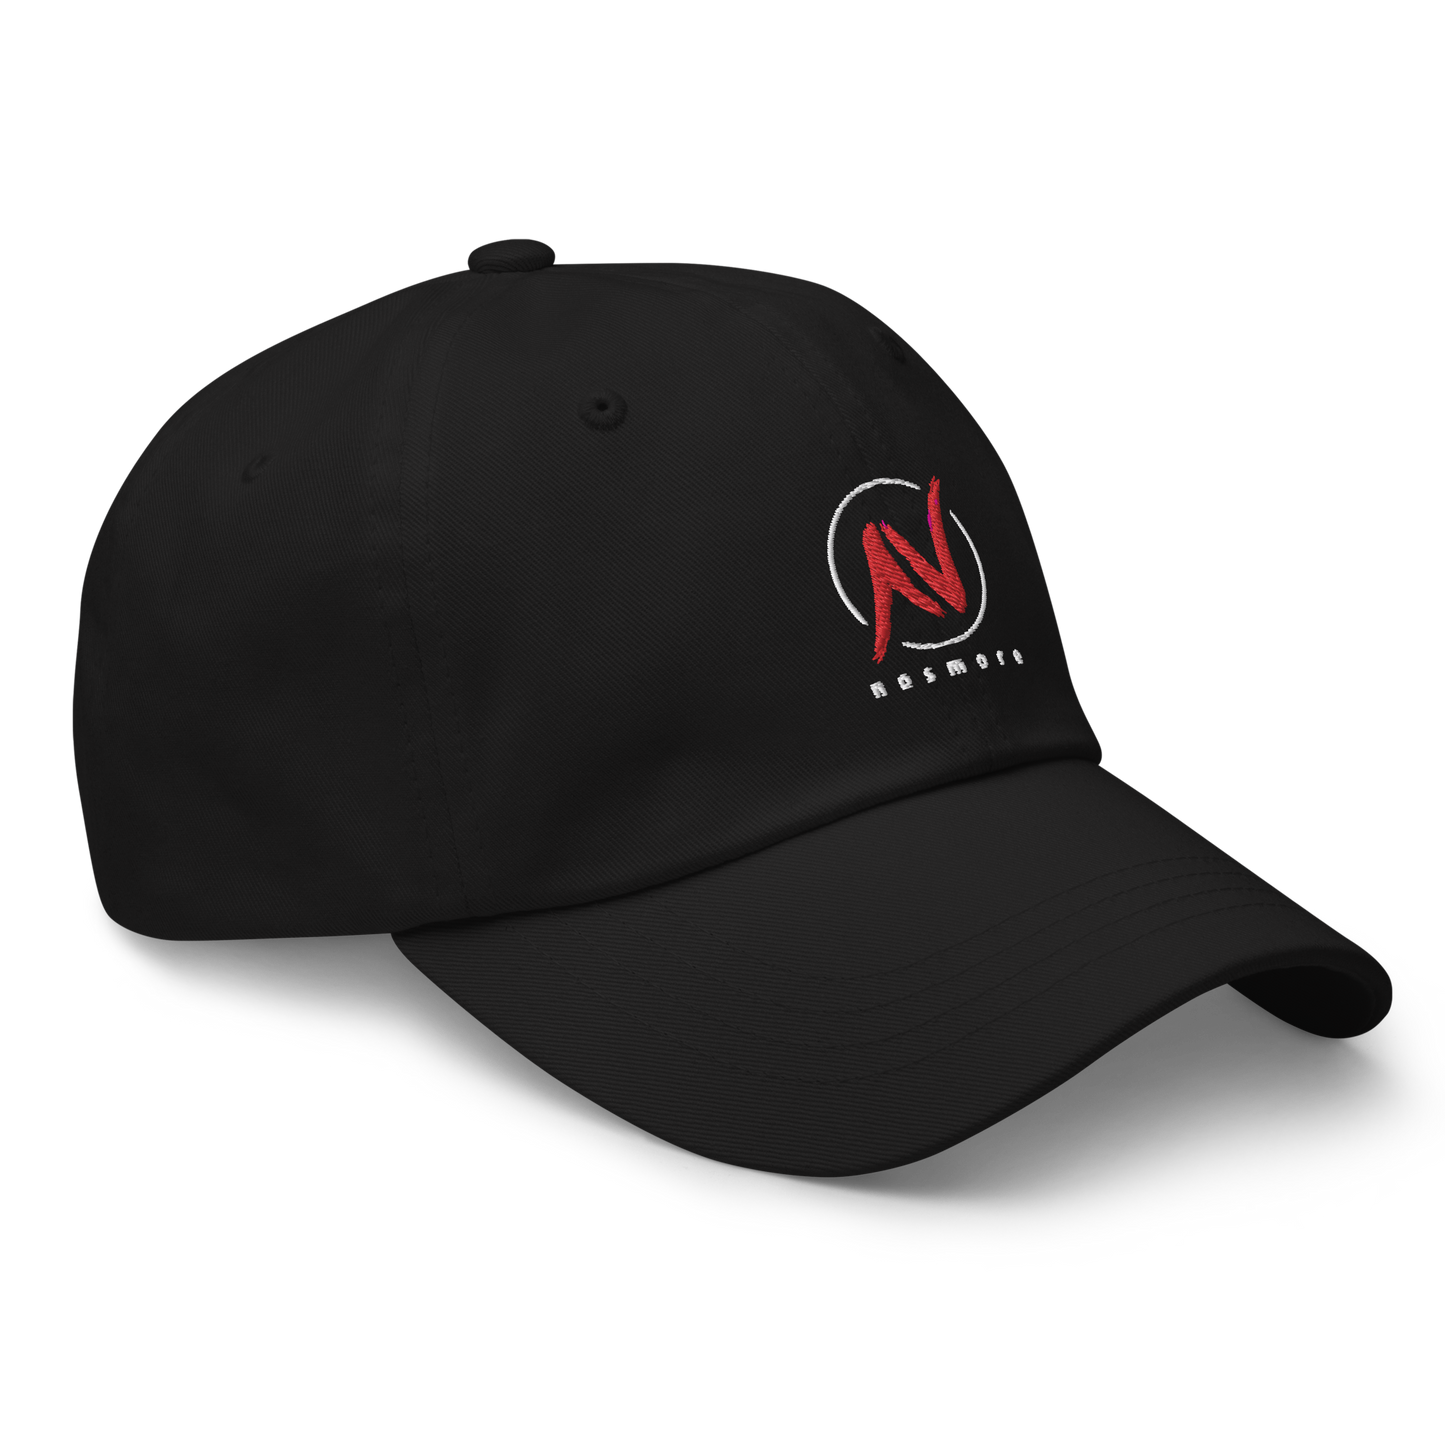 "nasmore official" hat